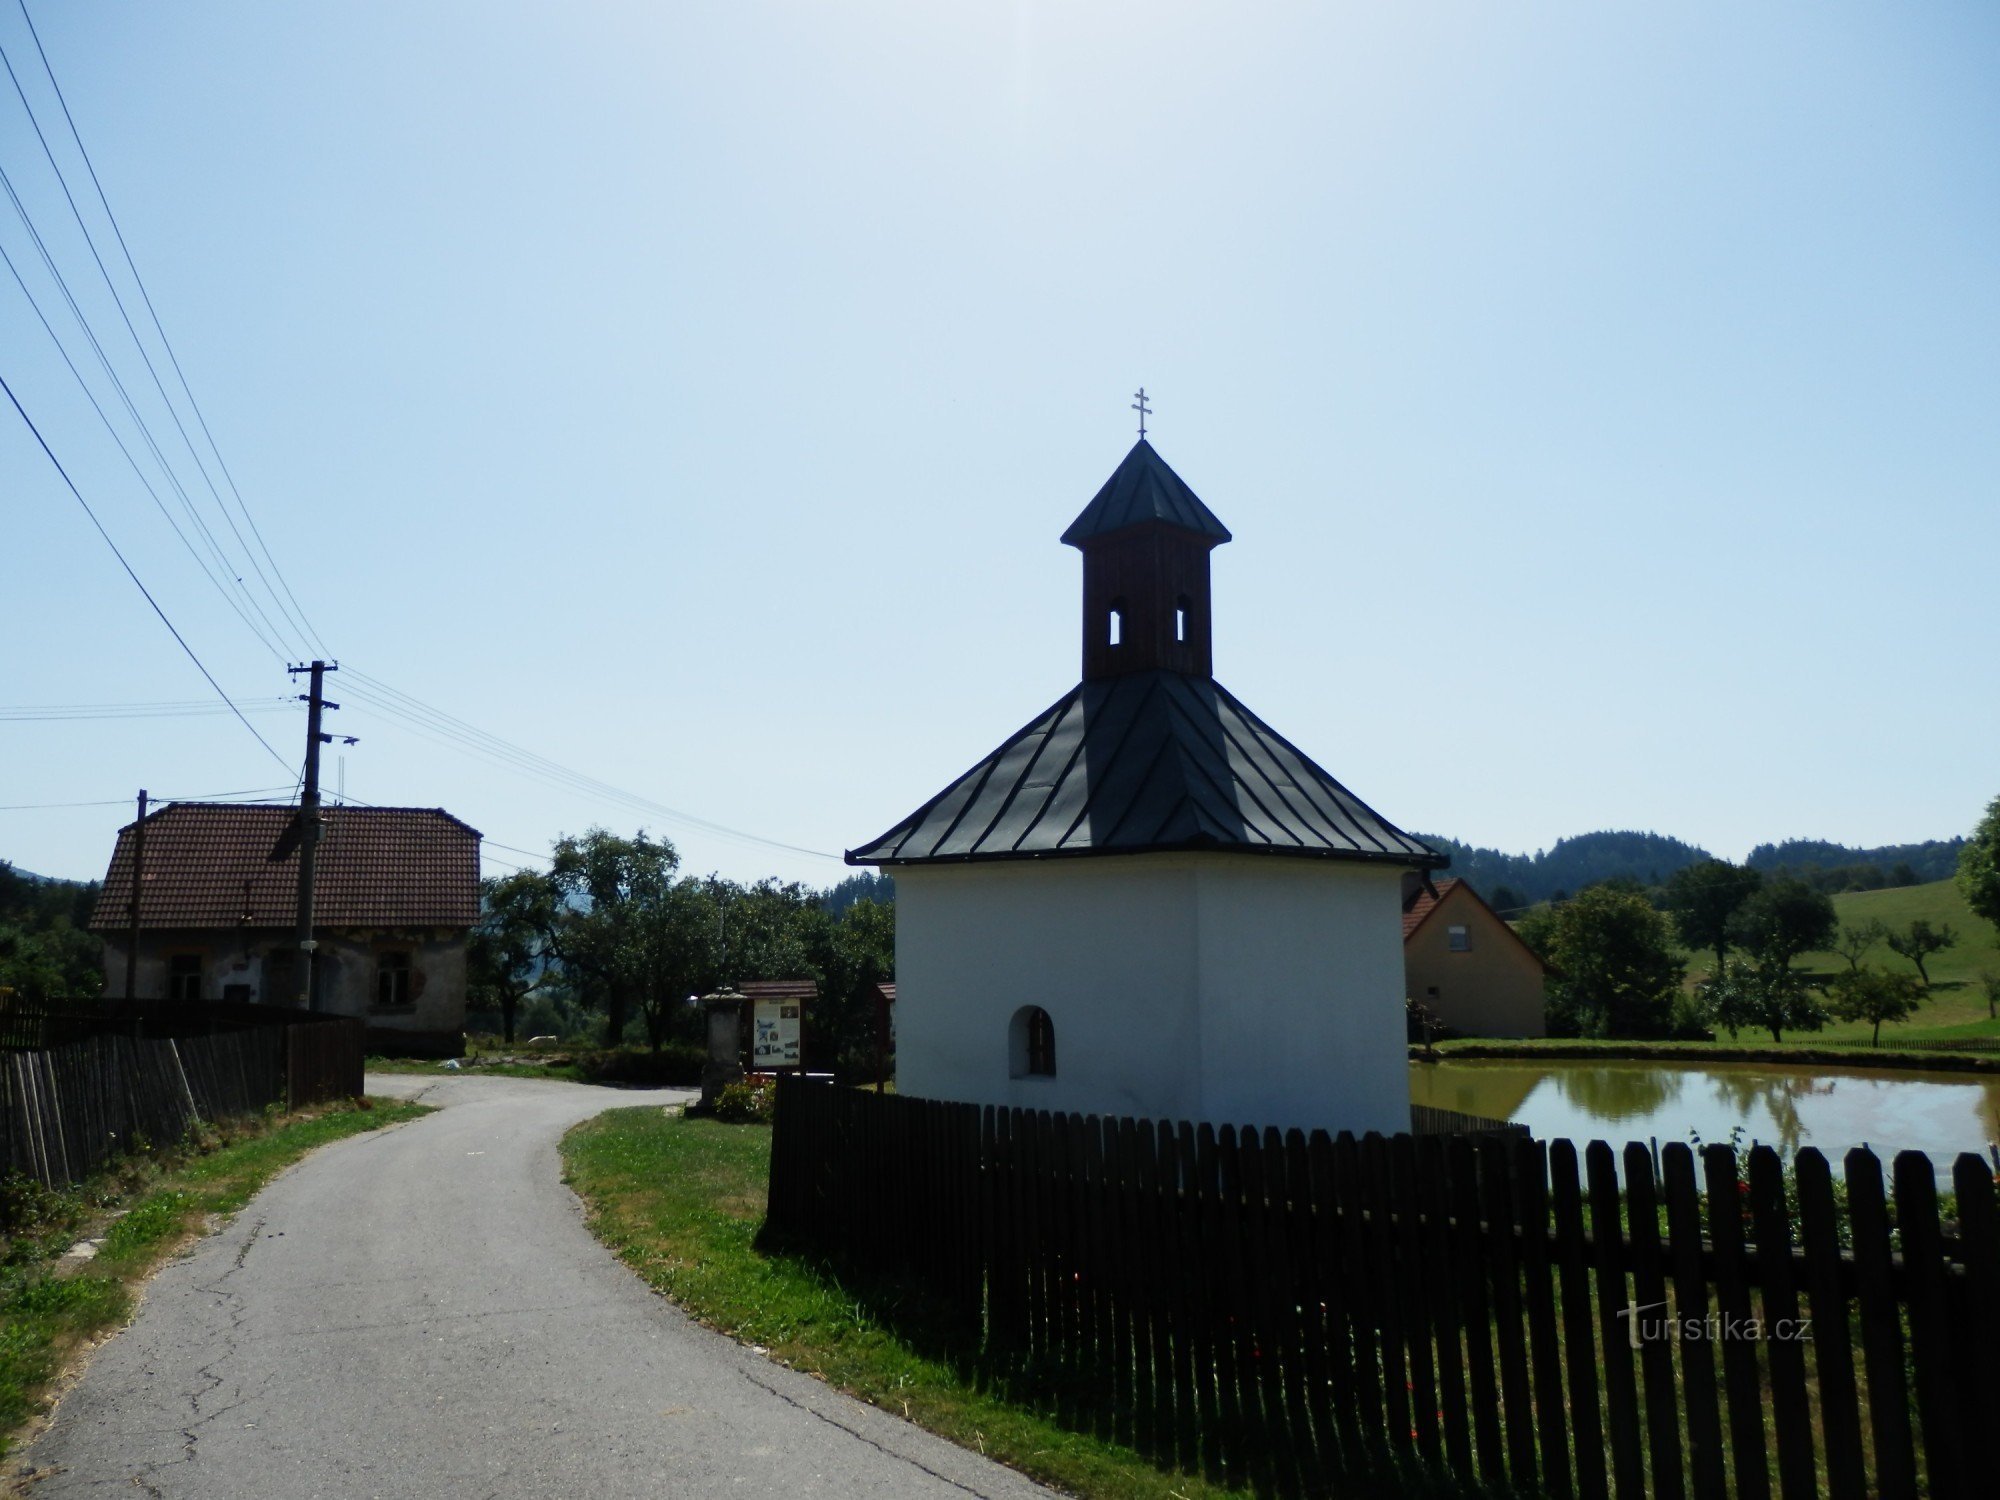 Bystřice nad Pernštejnem - Kozlovin paikallinen osa